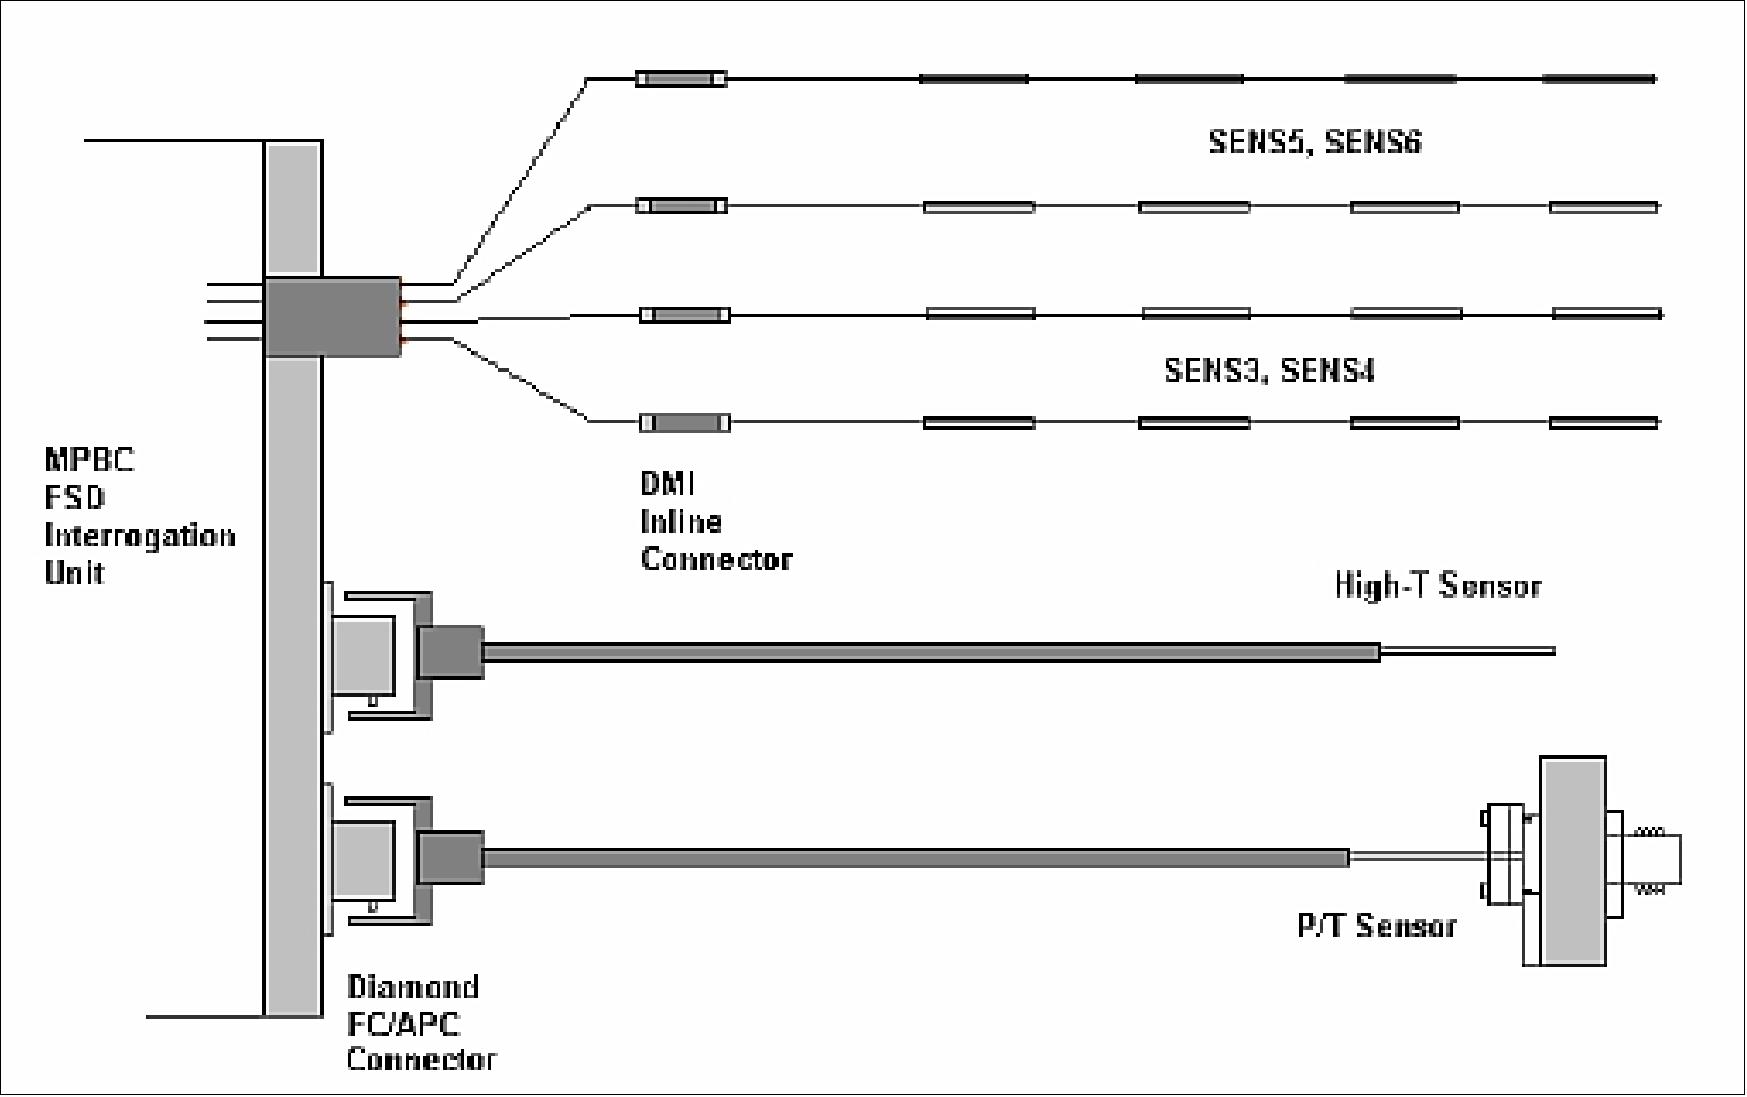 Figure 63: Schematic view of the FSD fiber-optic sensor signal harness (image credit: MPB Communications)